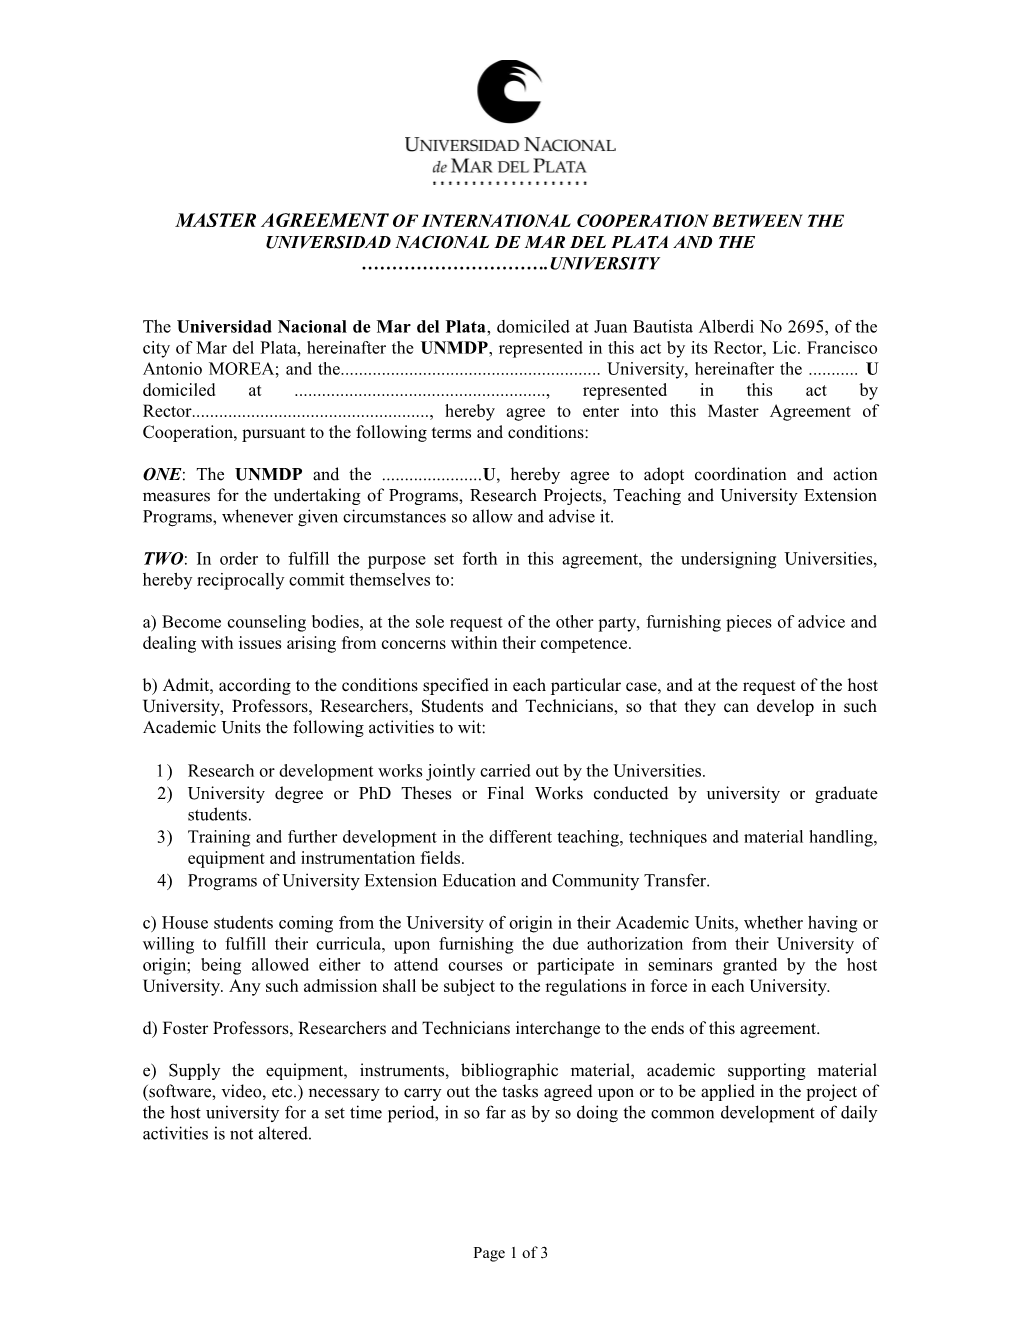 Master Agreement of International Cooperation Between the Universidad Nacional De Mar Del